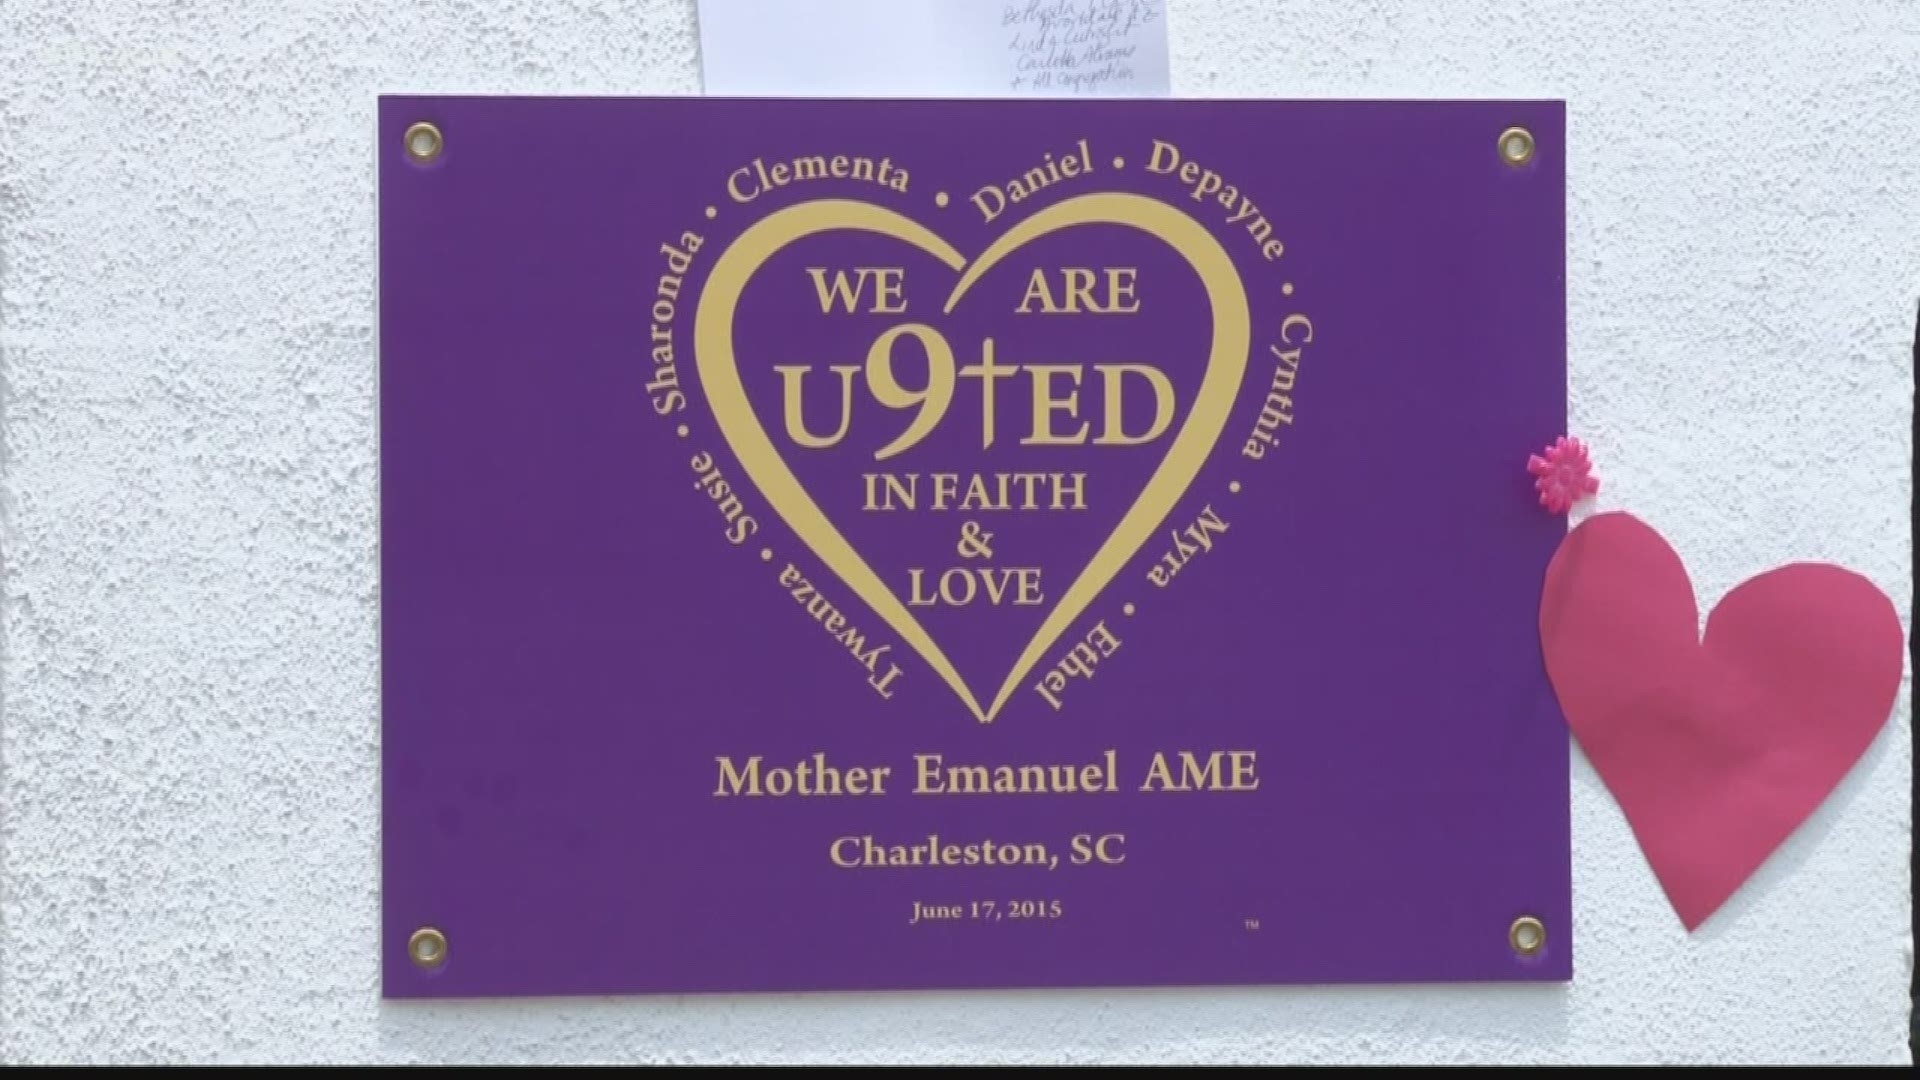 On Mother Emanuel Nine Day Remembrance, the first ever Emanuel Lives award was given.